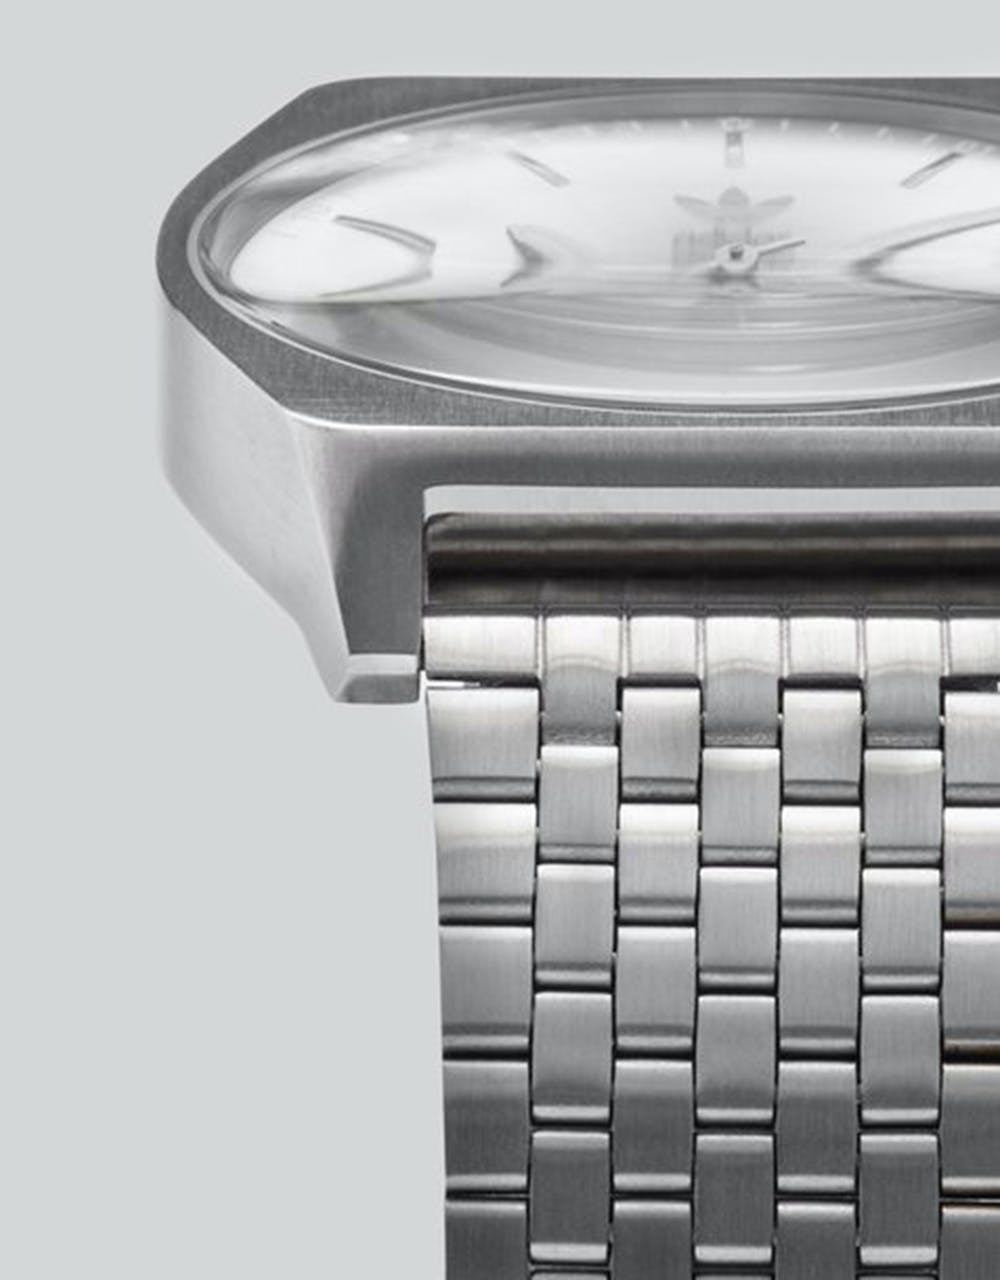 Adidas Process M1 Watch - All Silver